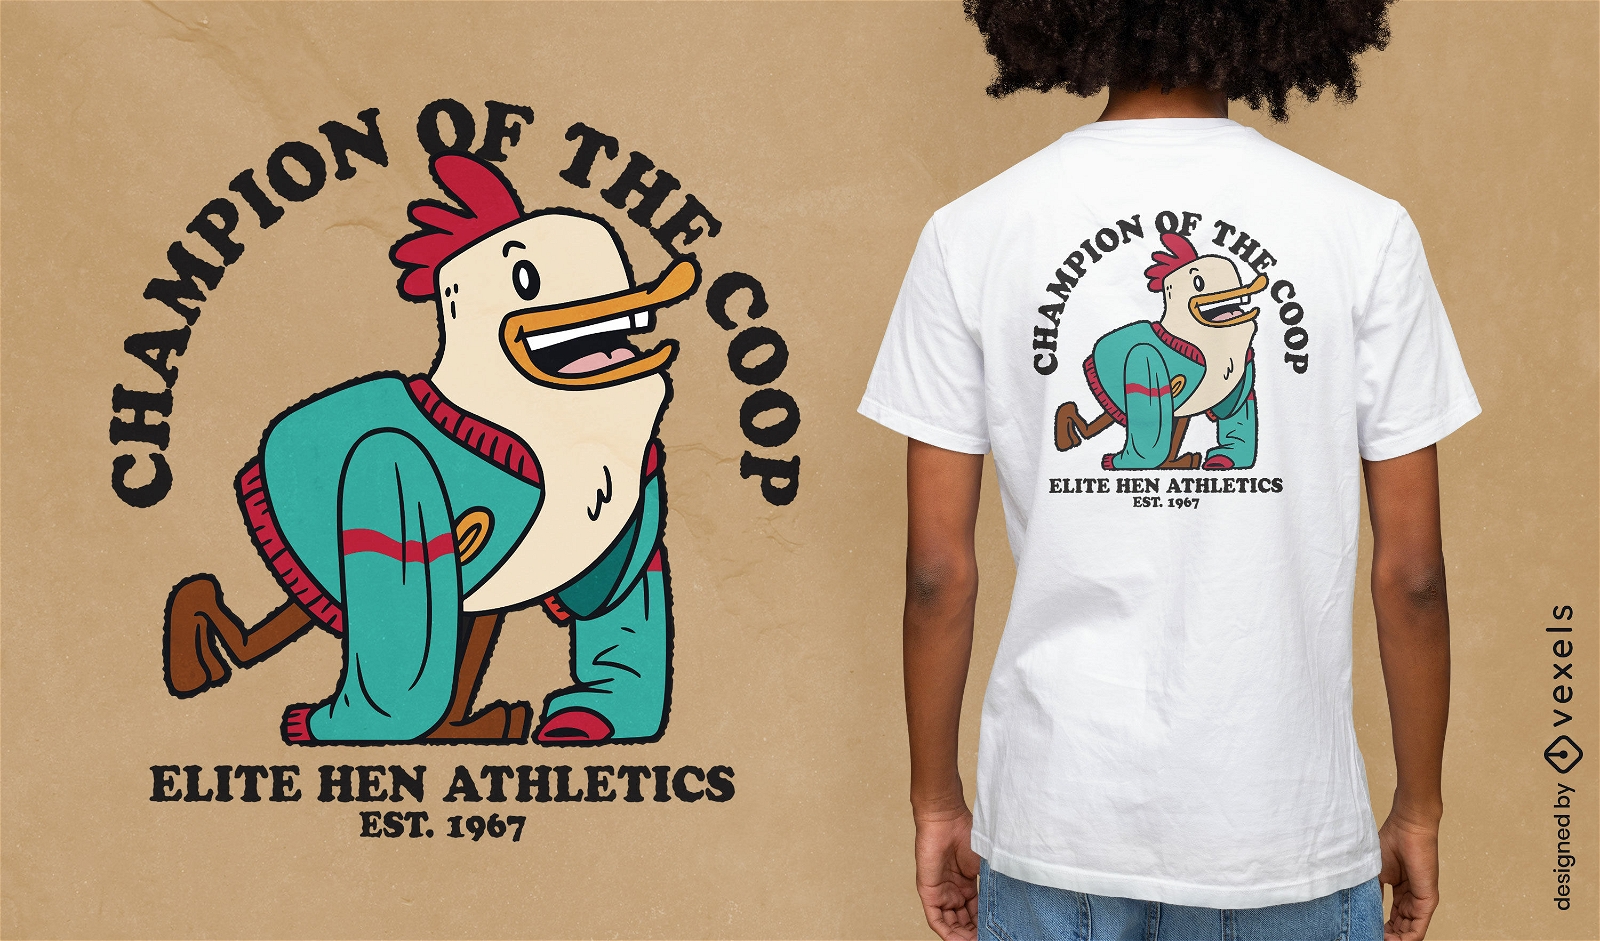 Dise?o de camiseta vintage de atleta gallina ?lite.